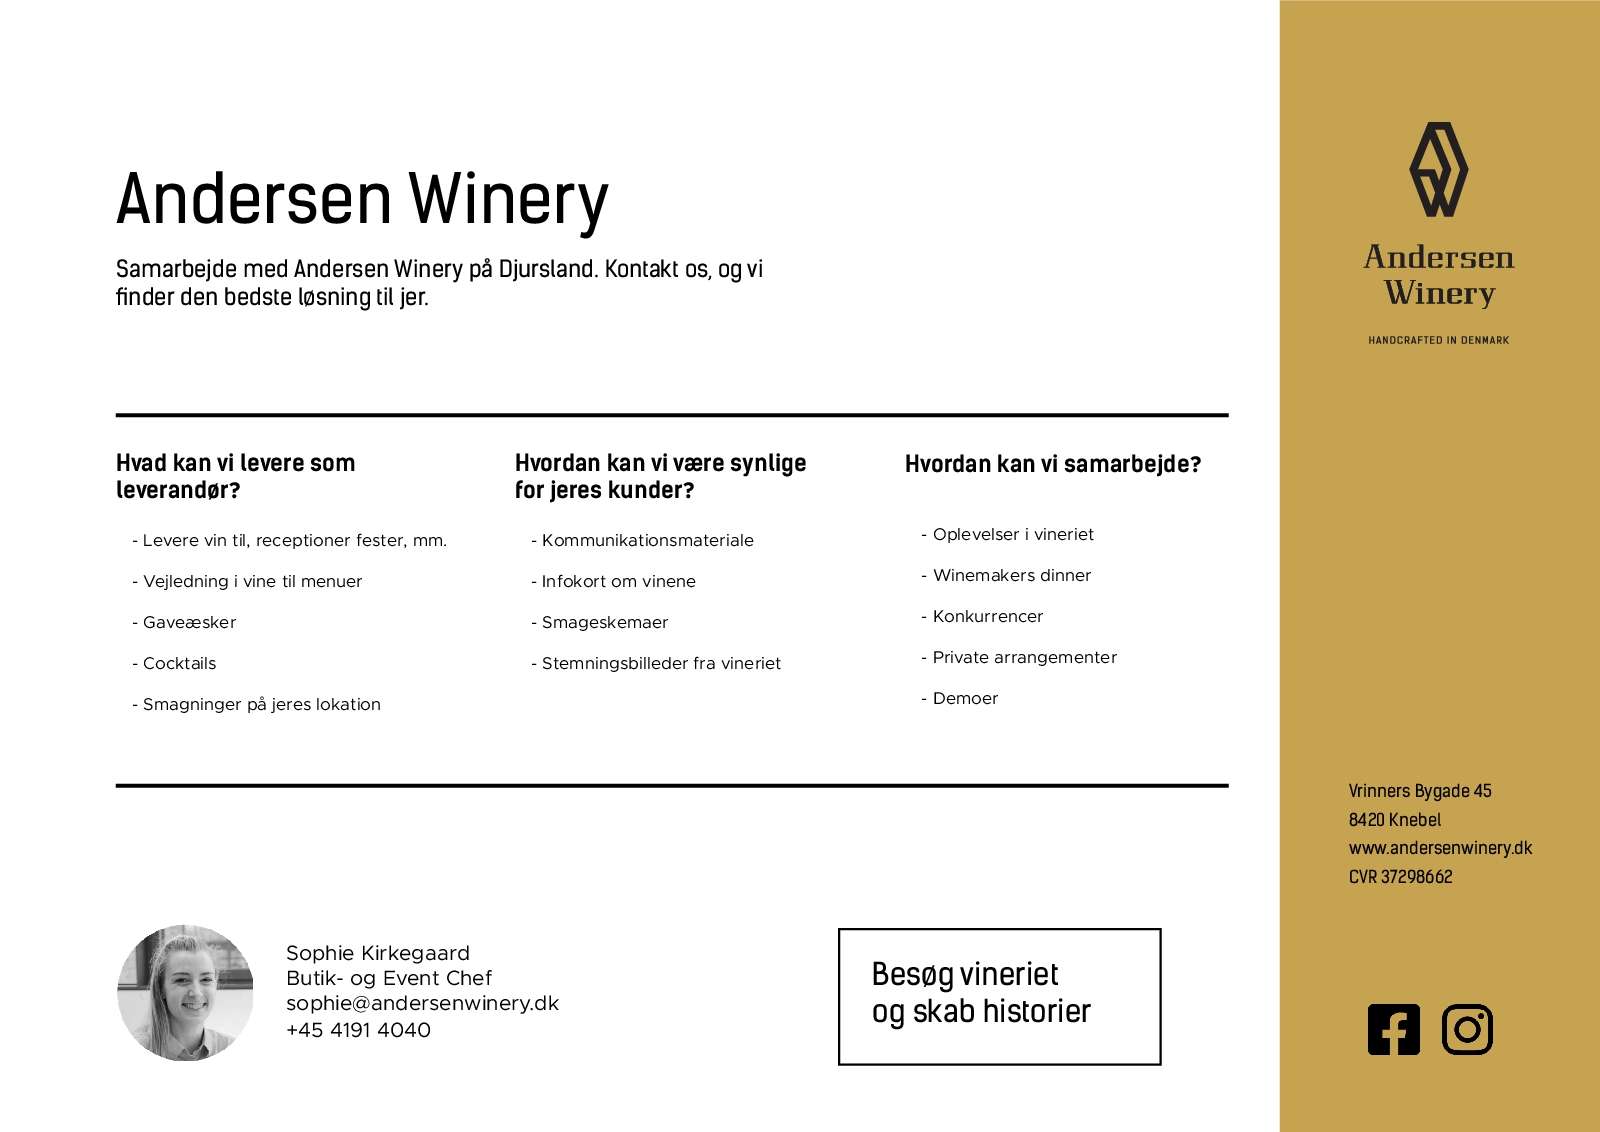 Andersen Winery - Præsentationsmateriale